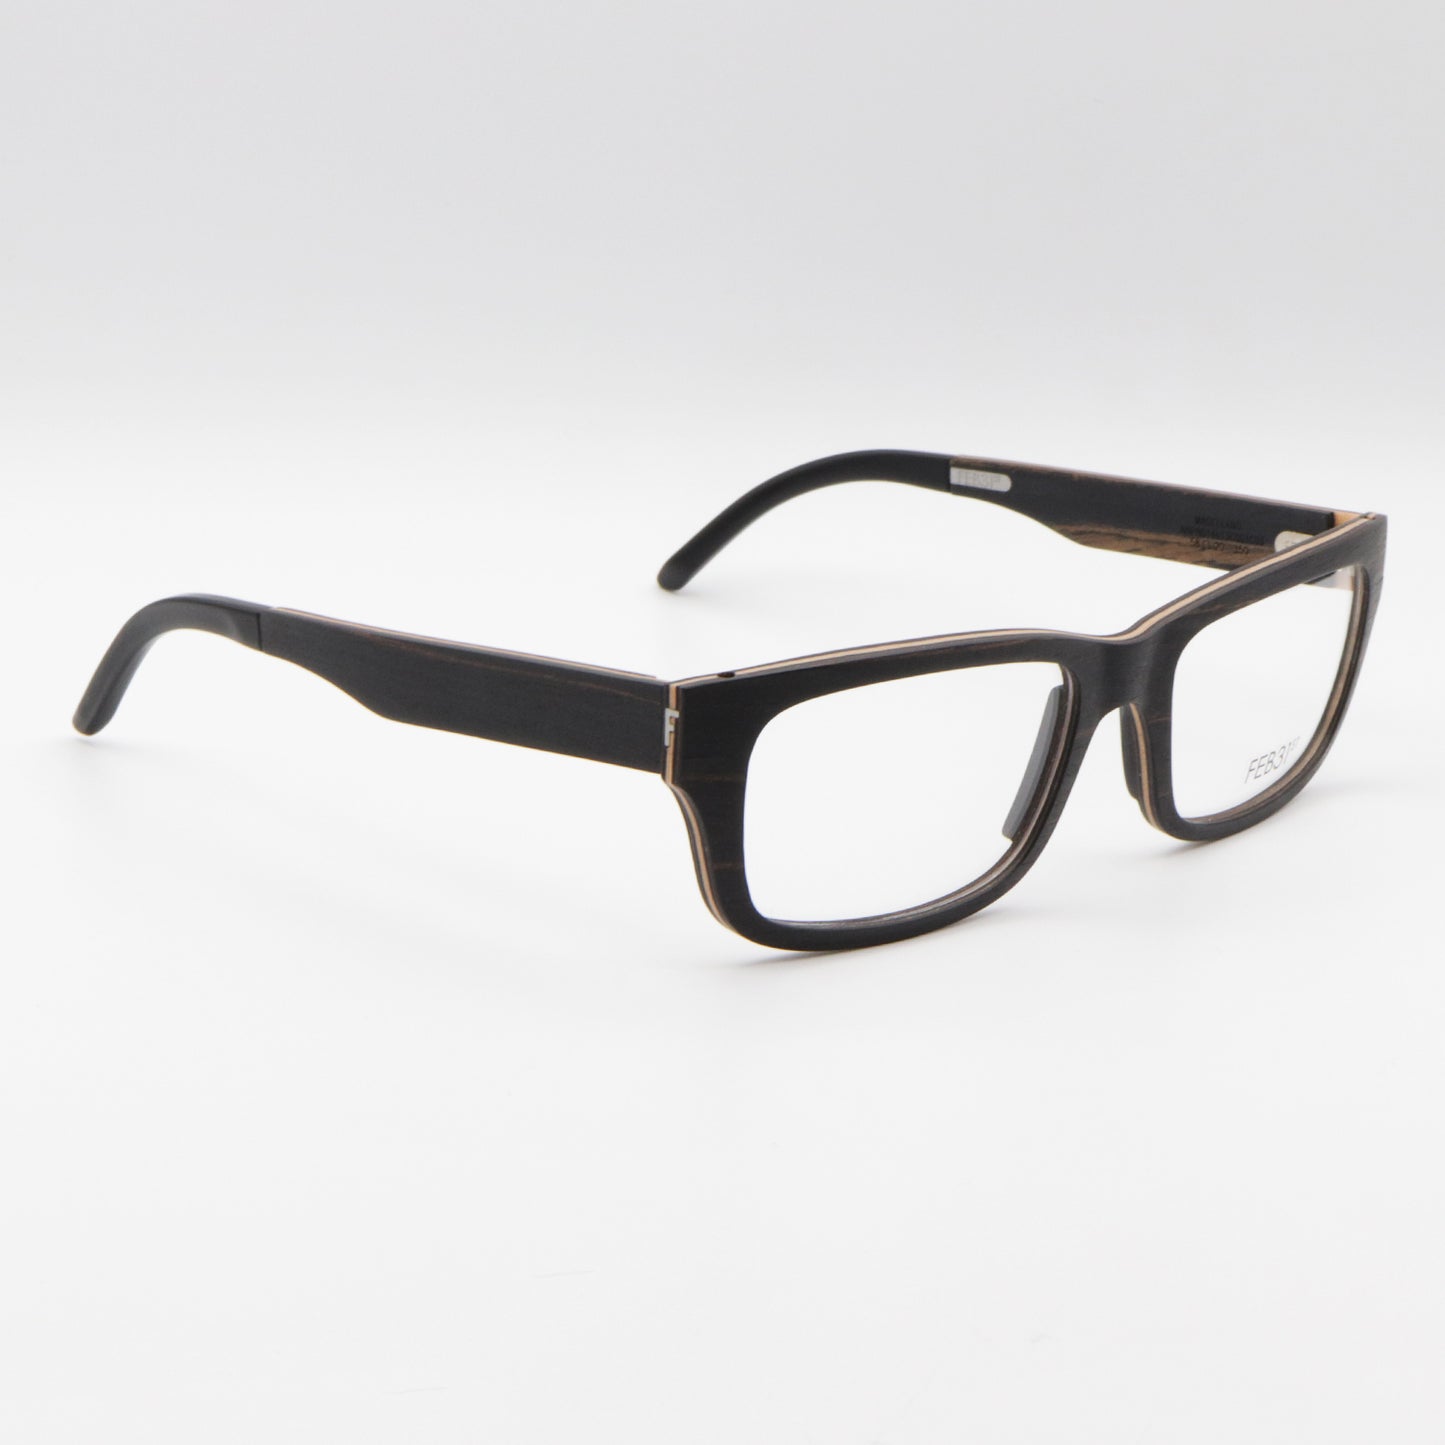 Magellano by FEB31st wooden glasses Black